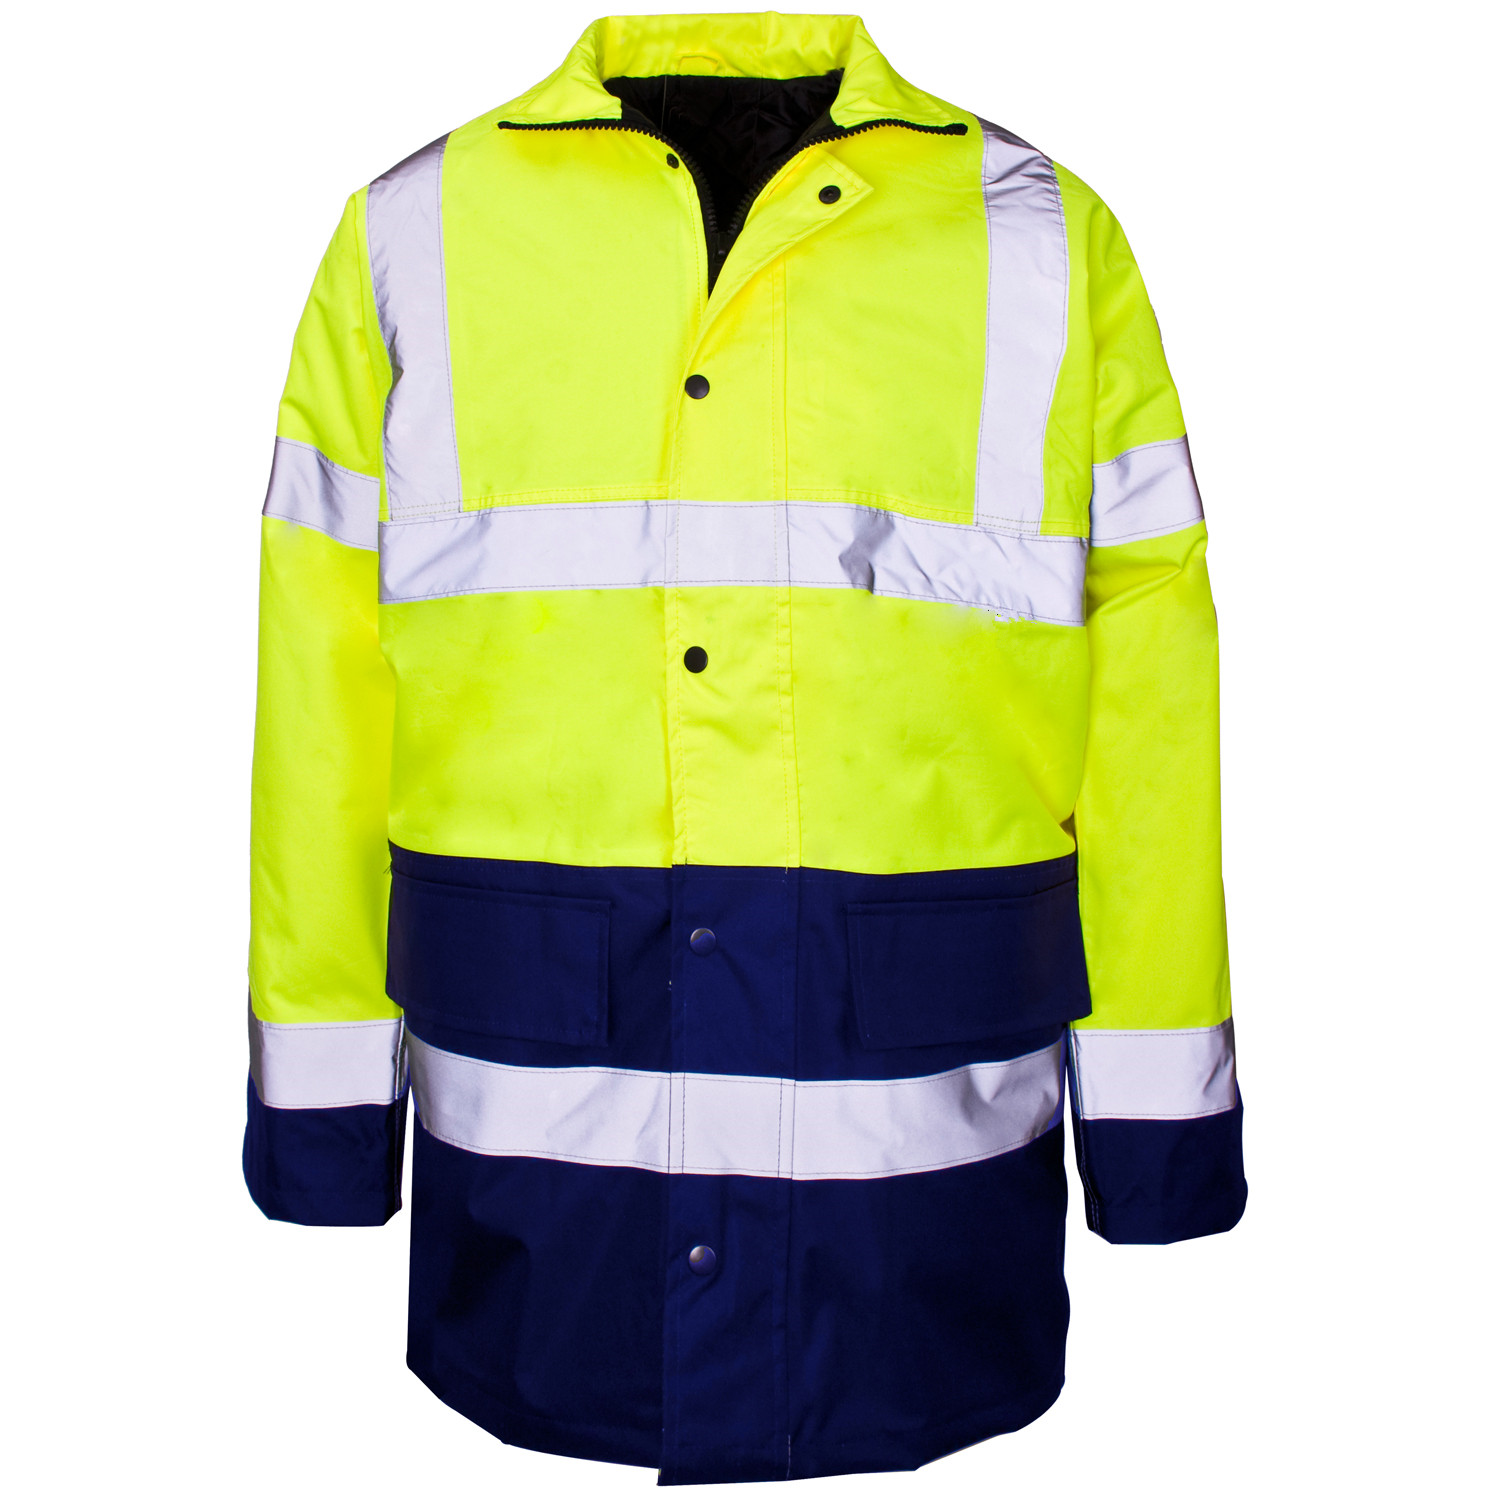 High Visibility Reflective Safety Jacket For Unisex Adults Uniform( HJ-2469 )